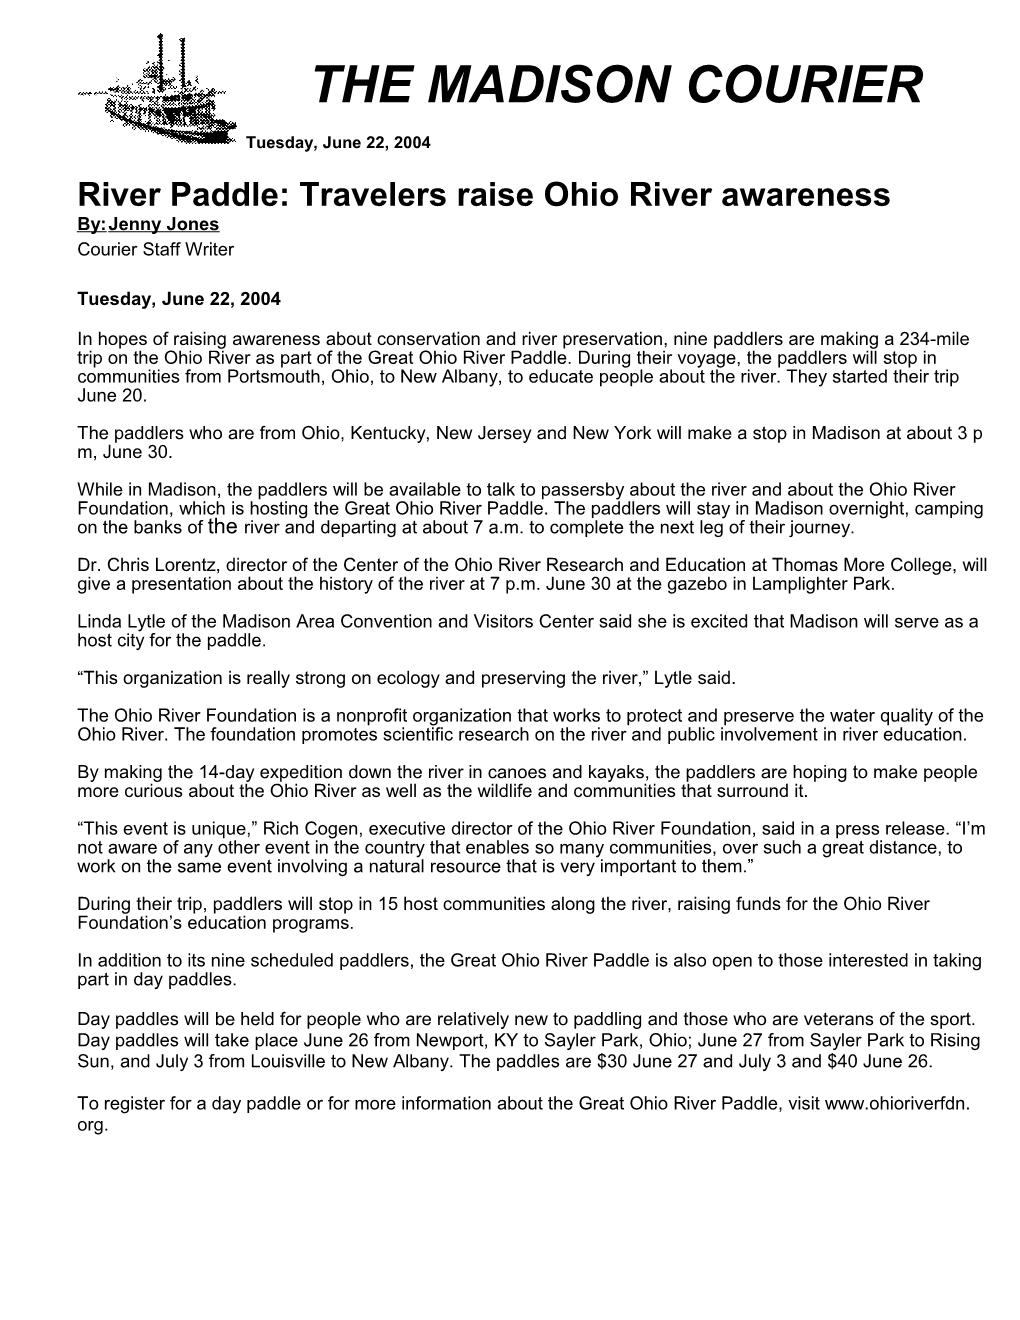 River Paddle: Travelers Raise Ohio River Awareness